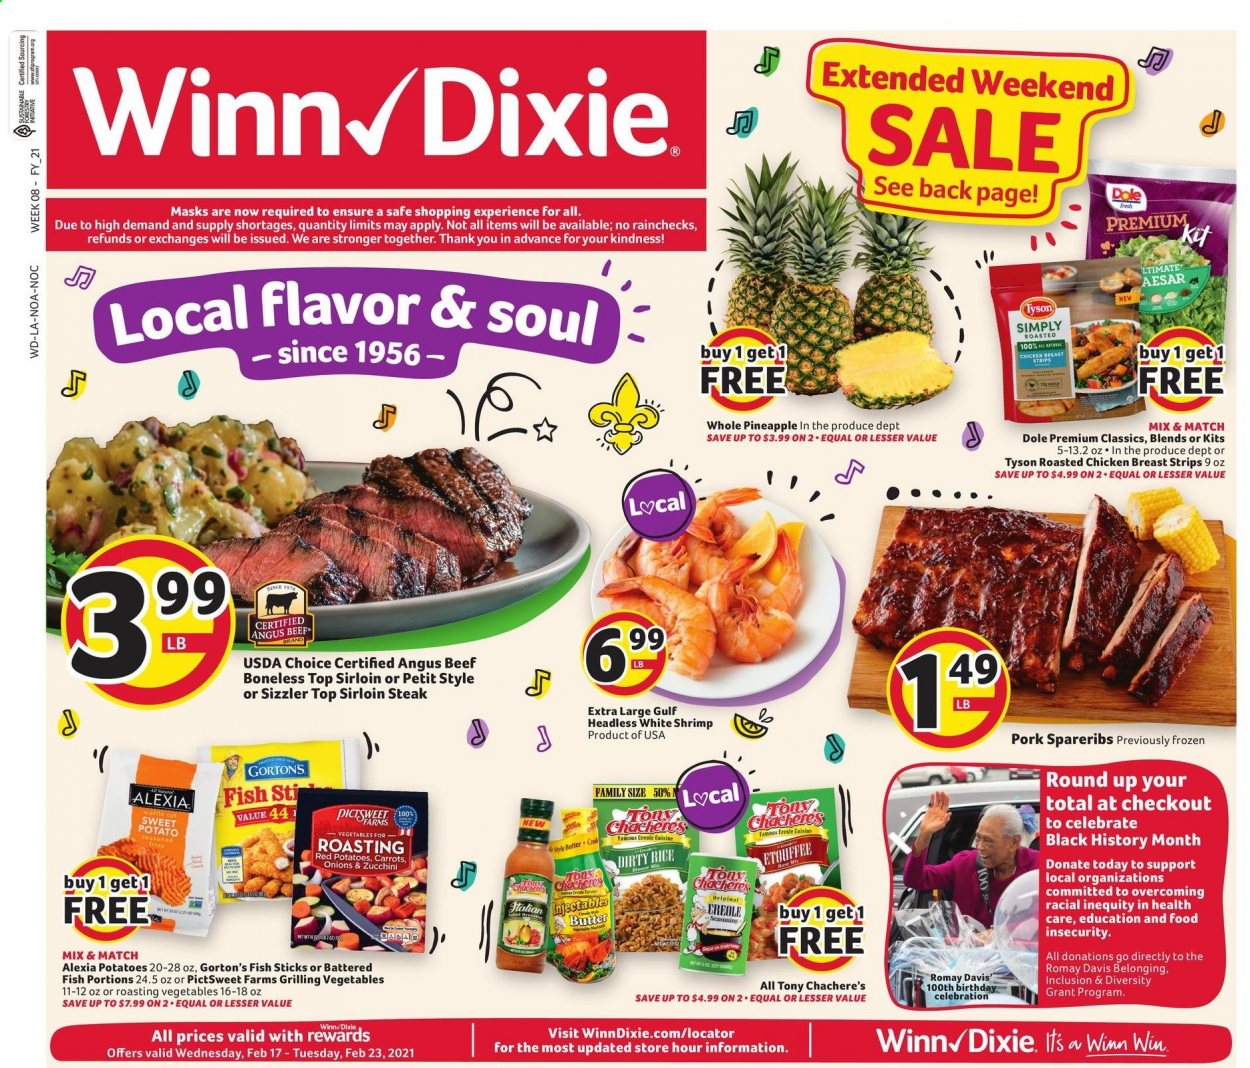 thumbnail - Winn Dixie Flyer - 02/17/2021 - 02/23/2021 - Sales products - Dole, fish, shrimps, Gorton's, fish sticks, butter, carrots, zucchini, sweet potato, strips, potato fries, rice, chicken breasts, beef meat, beef sirloin, steak, sirloin steak, pork spare ribs. Page 1.